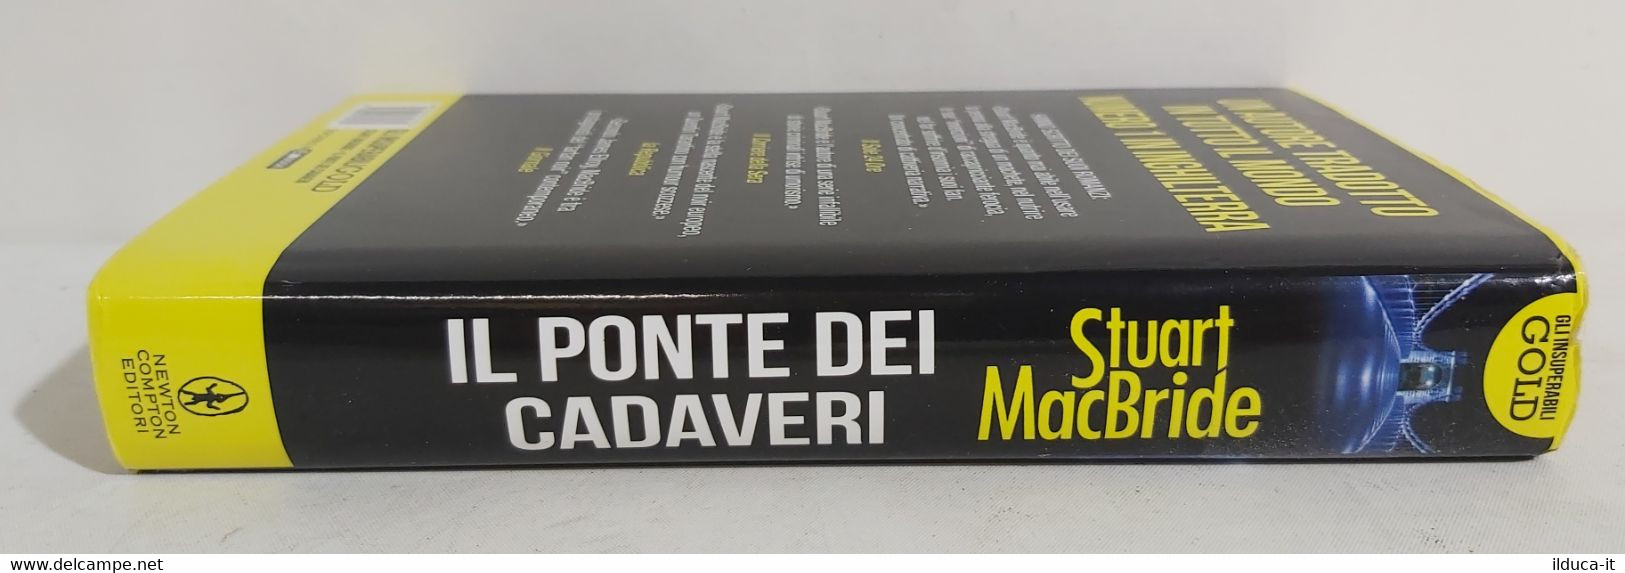 I101061 S. MacBride - Il Ponte Dei Cadaveri - Newton Compton 2019 - Thrillers